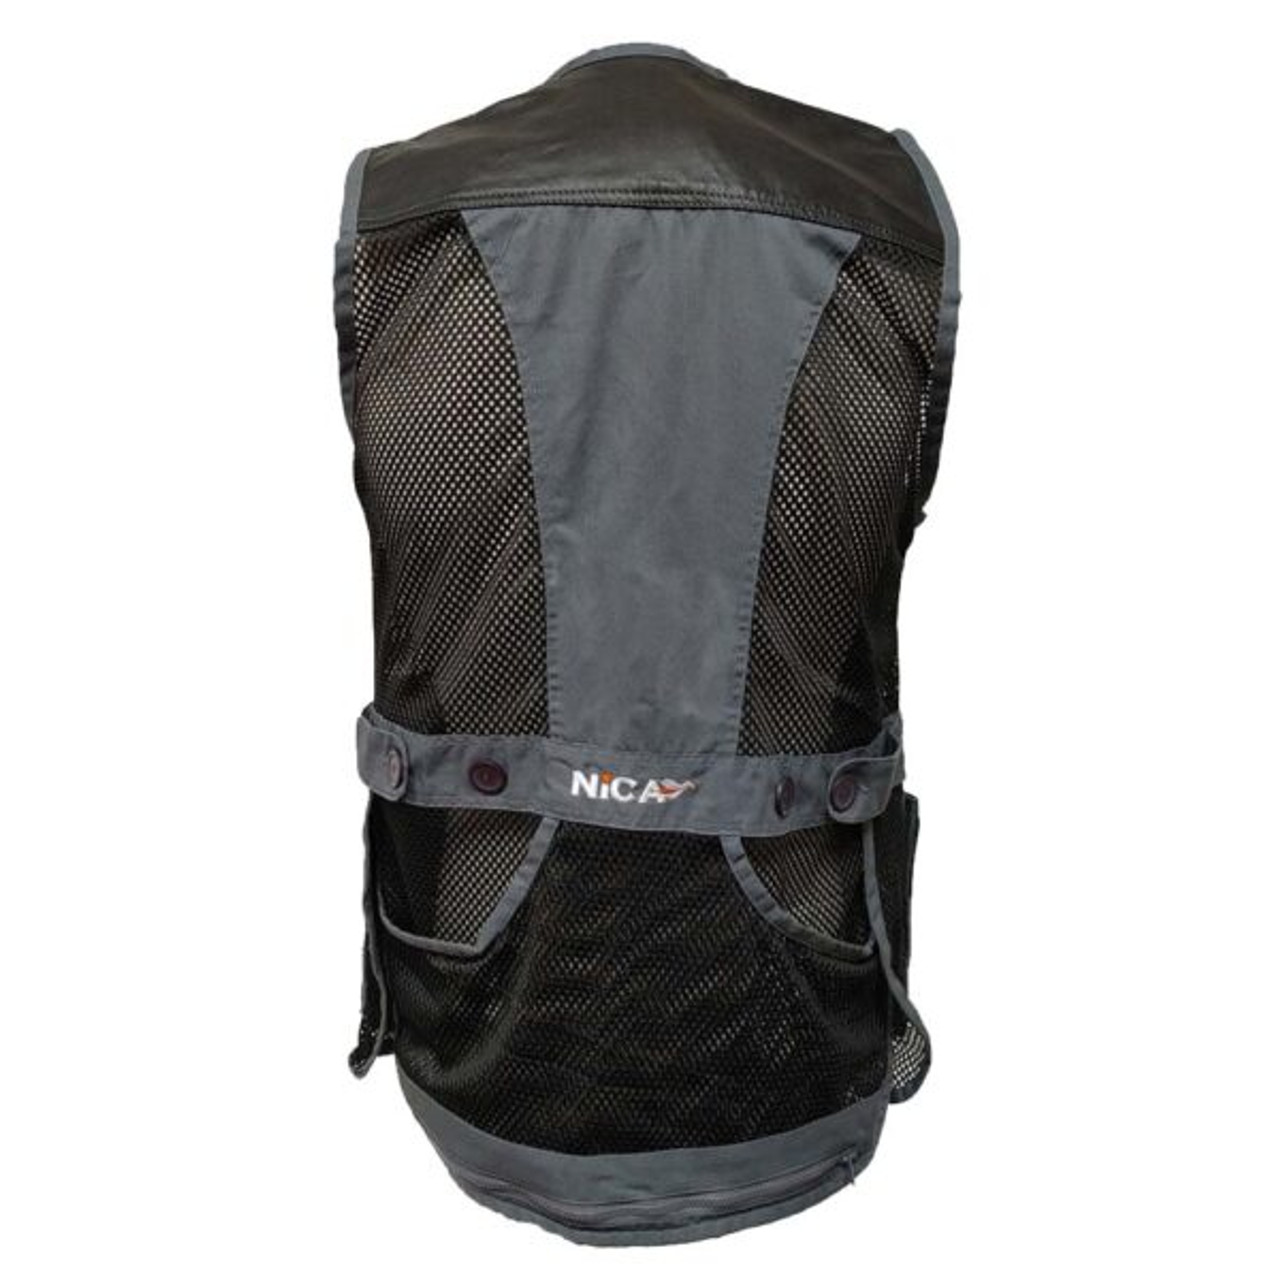 Nica Design6 Shooting Vest-Gray- Back